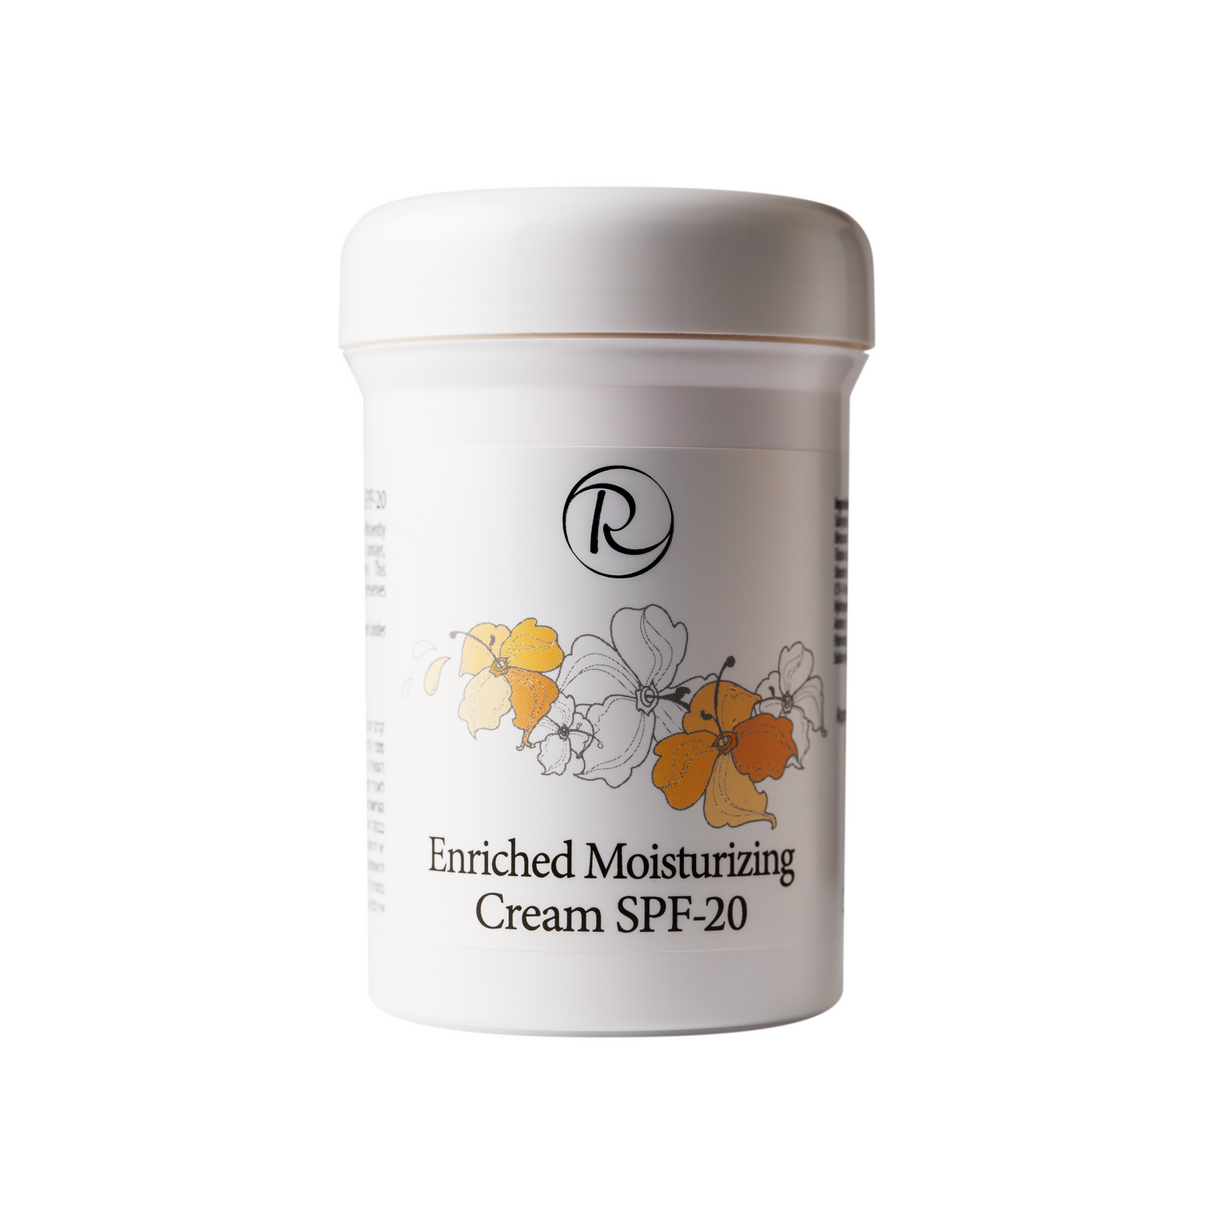 Renew Enriched Moisturizing Cream SPF-20 – Rich moisturizing cream with SPF-20